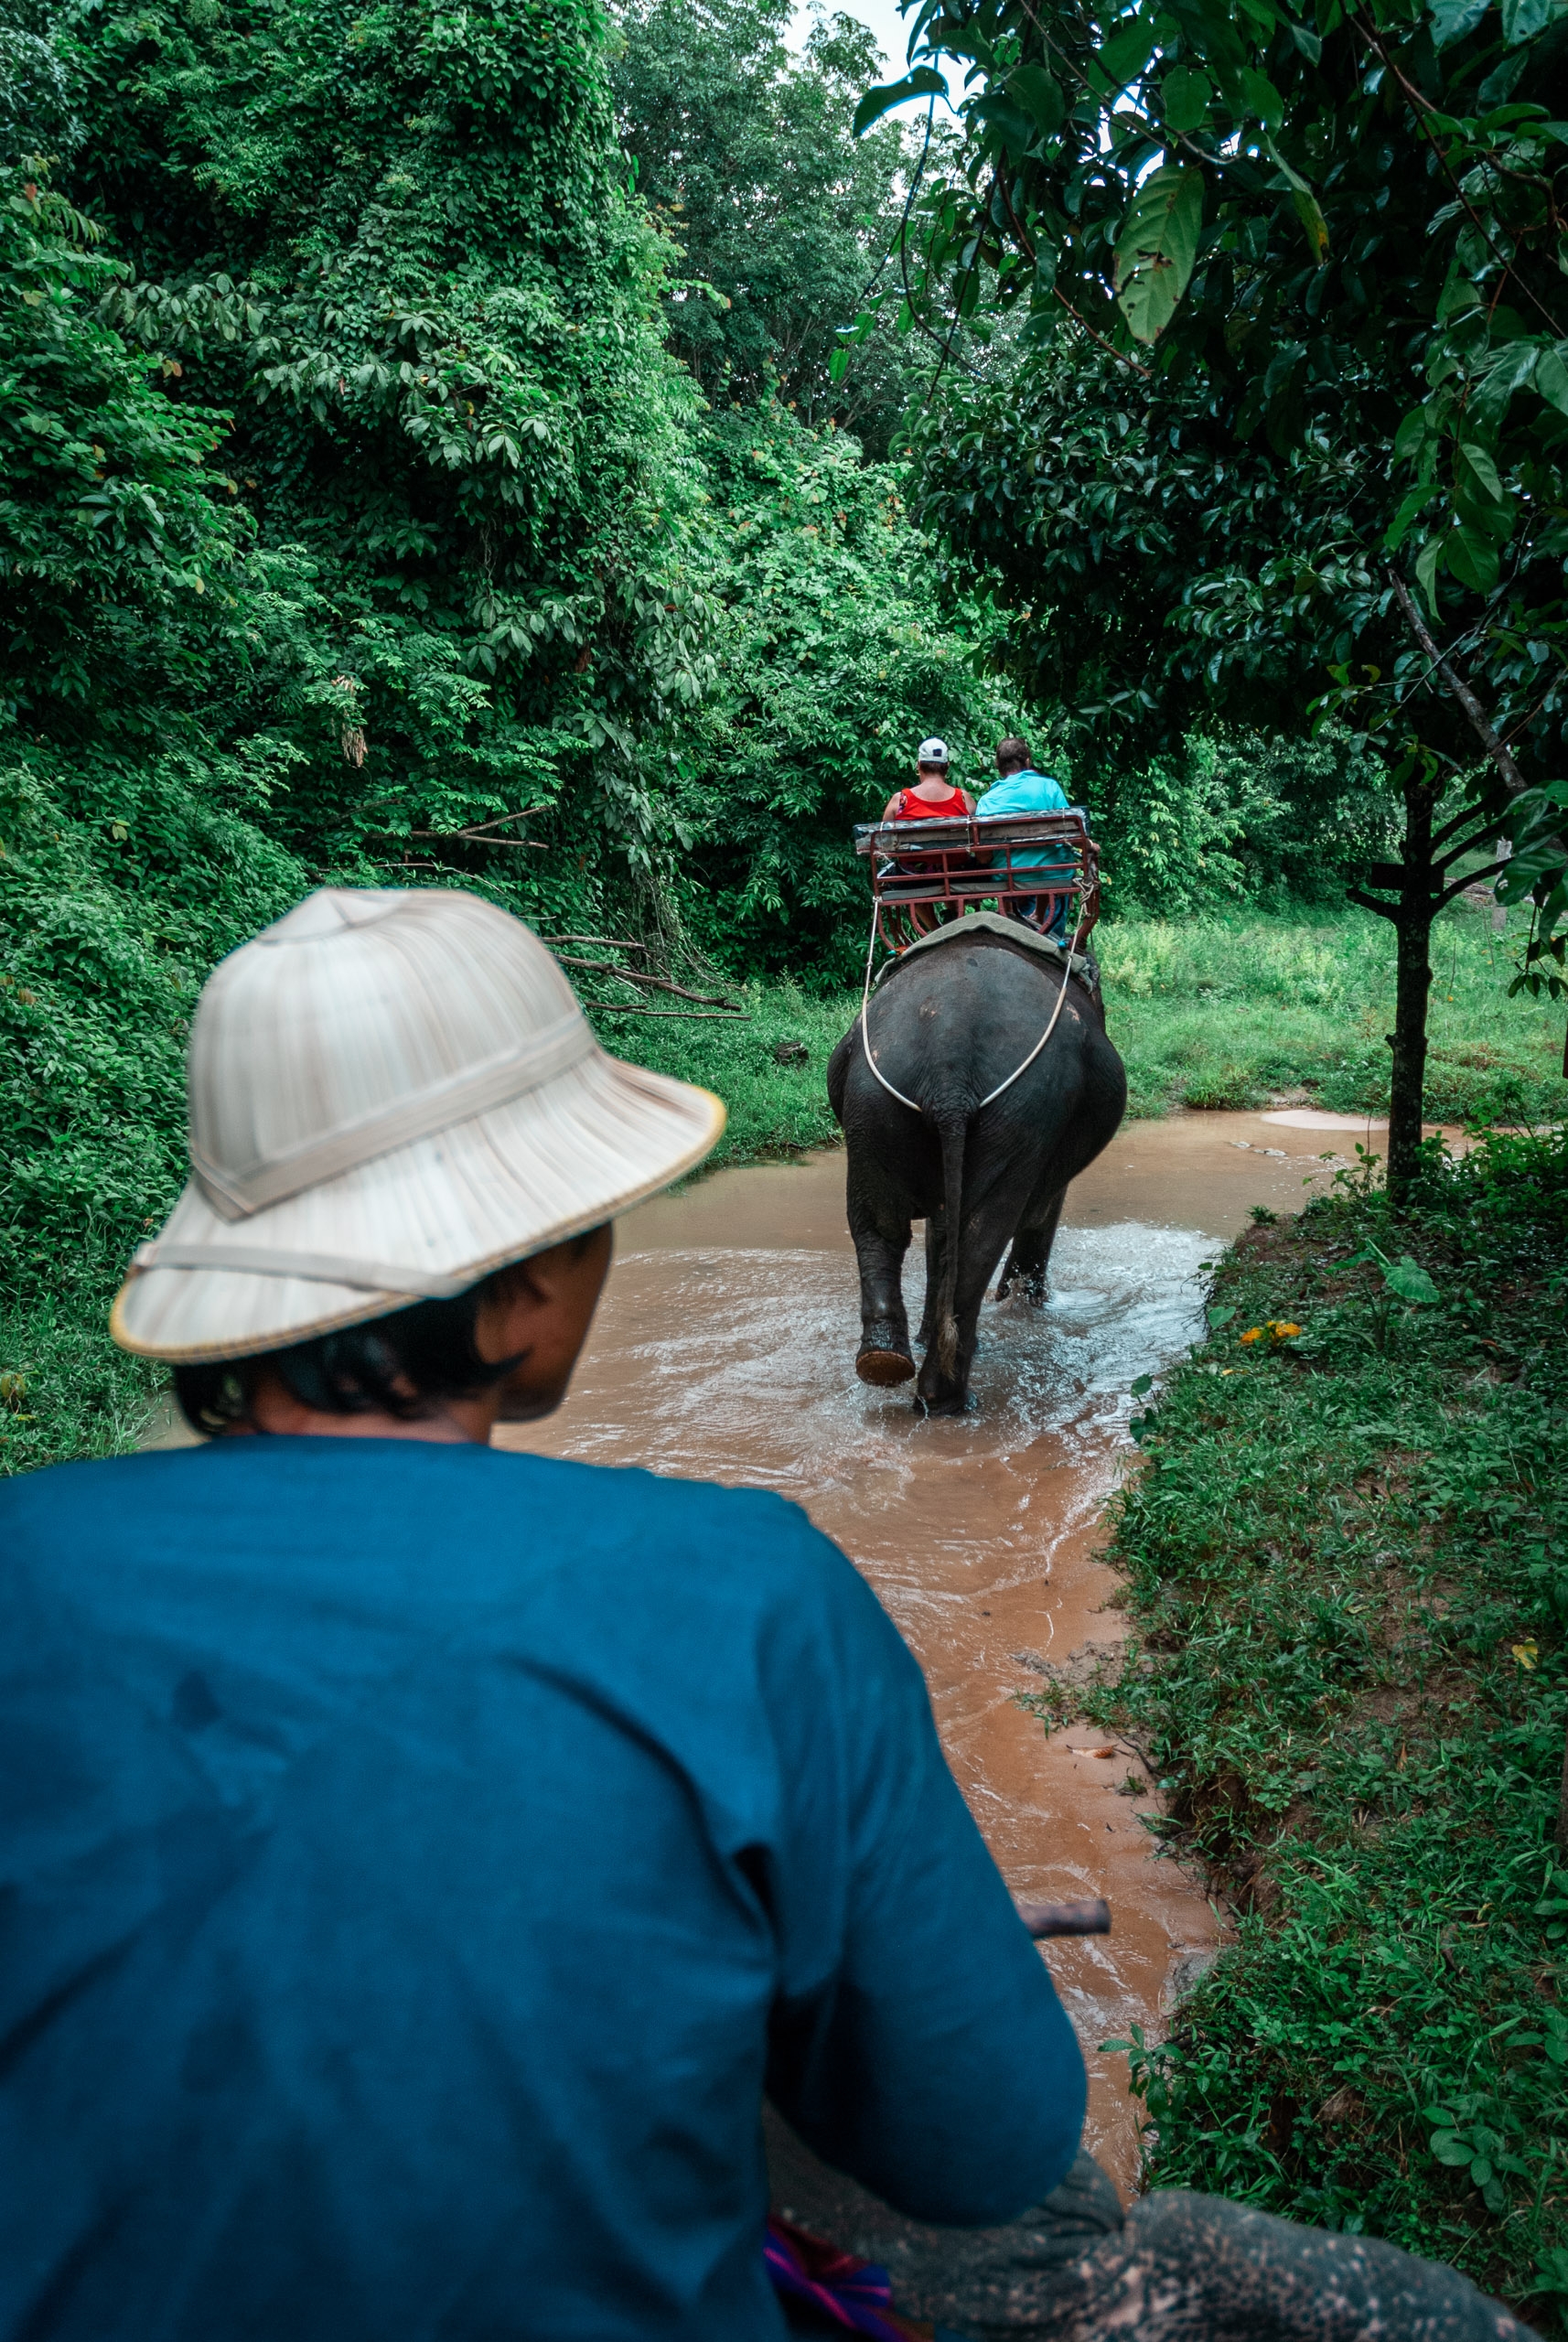 Riding an Elephant at the Elephant Reserve